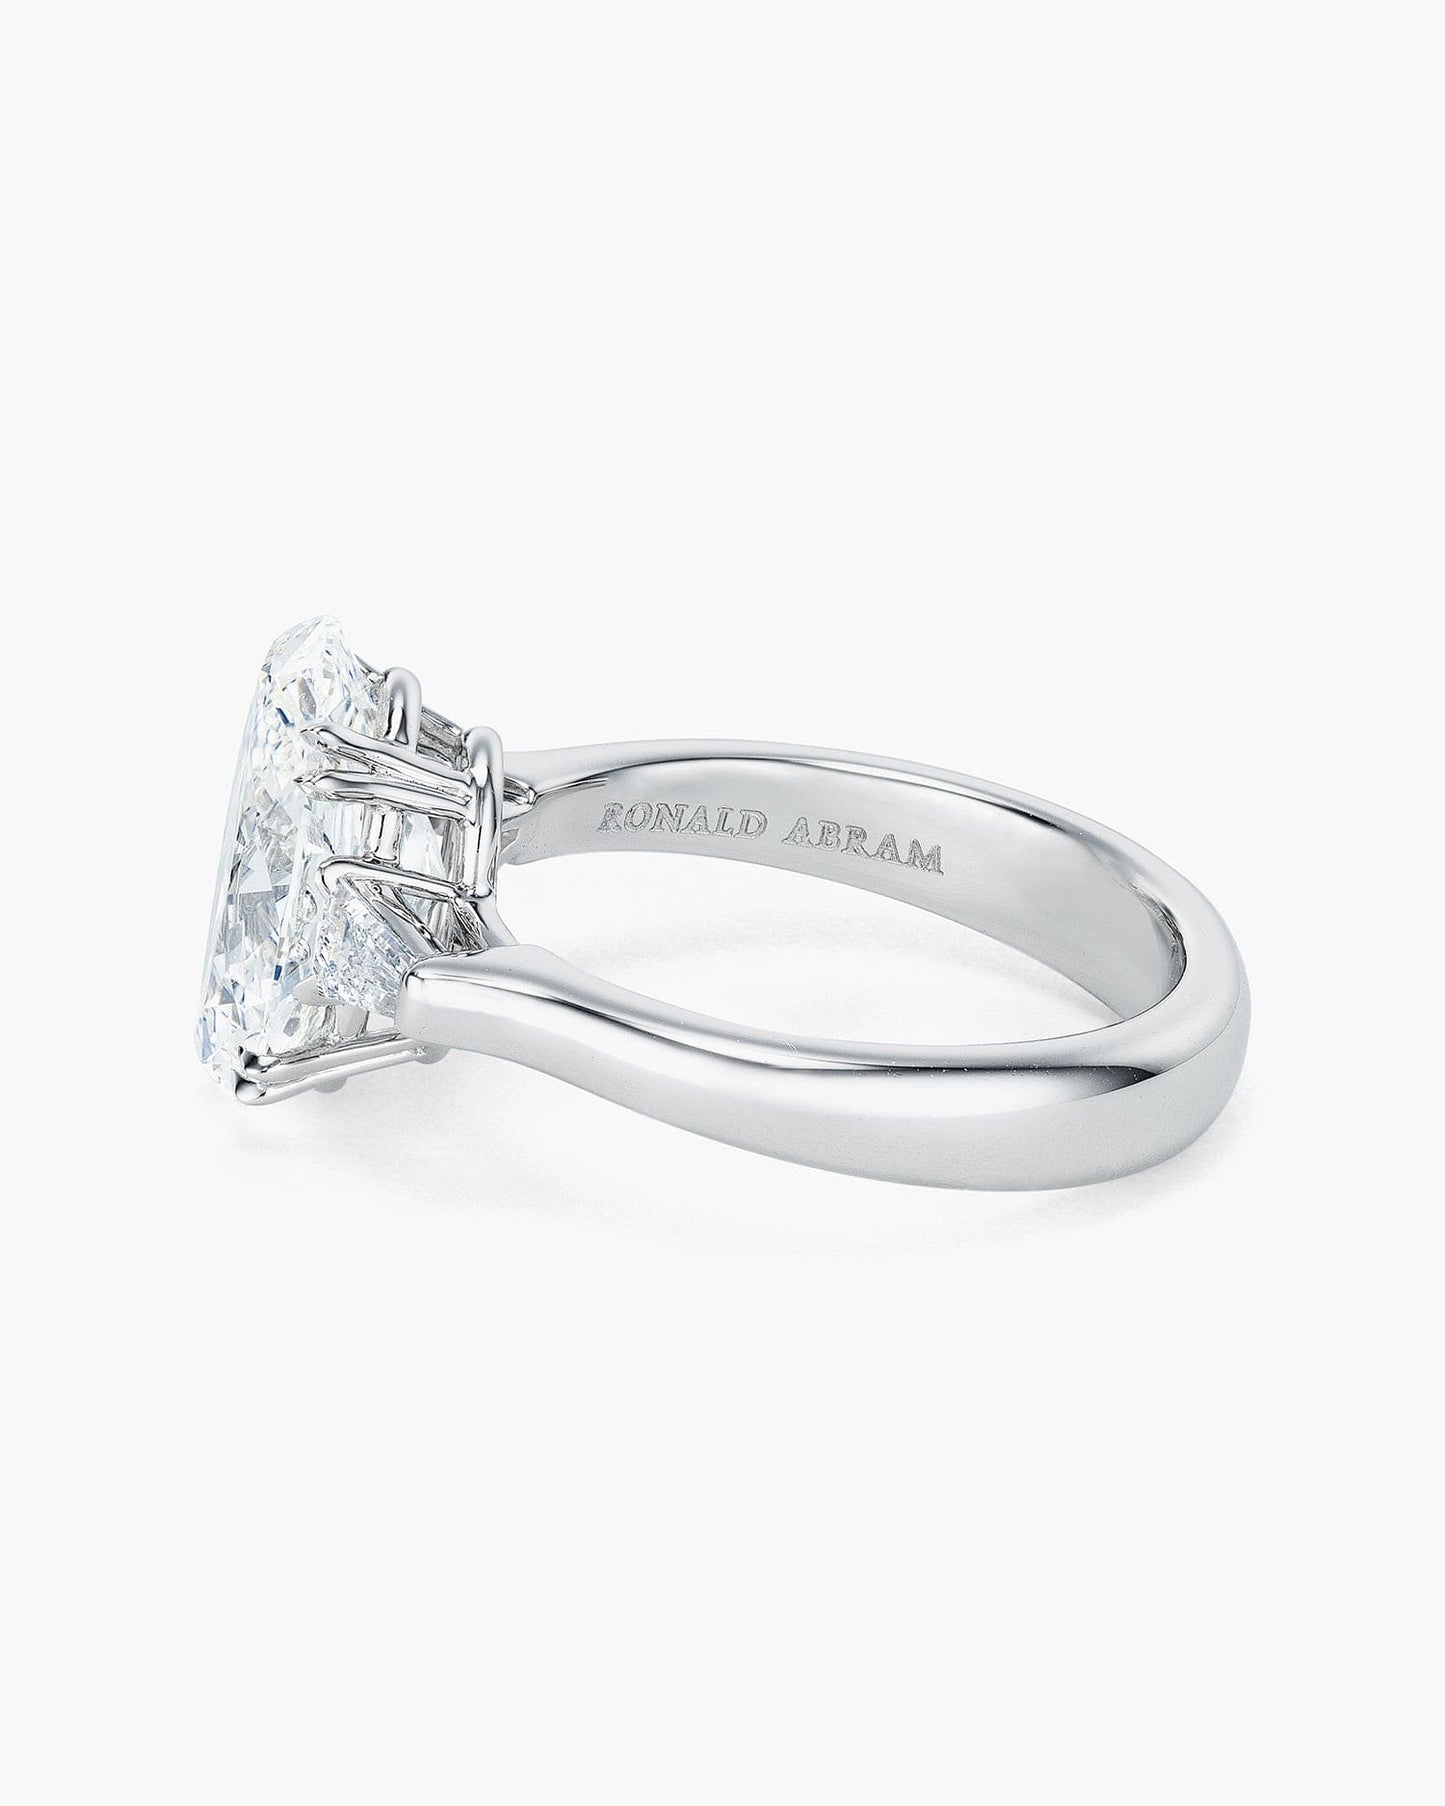 3.16 carat Oval Shape Diamond Ring